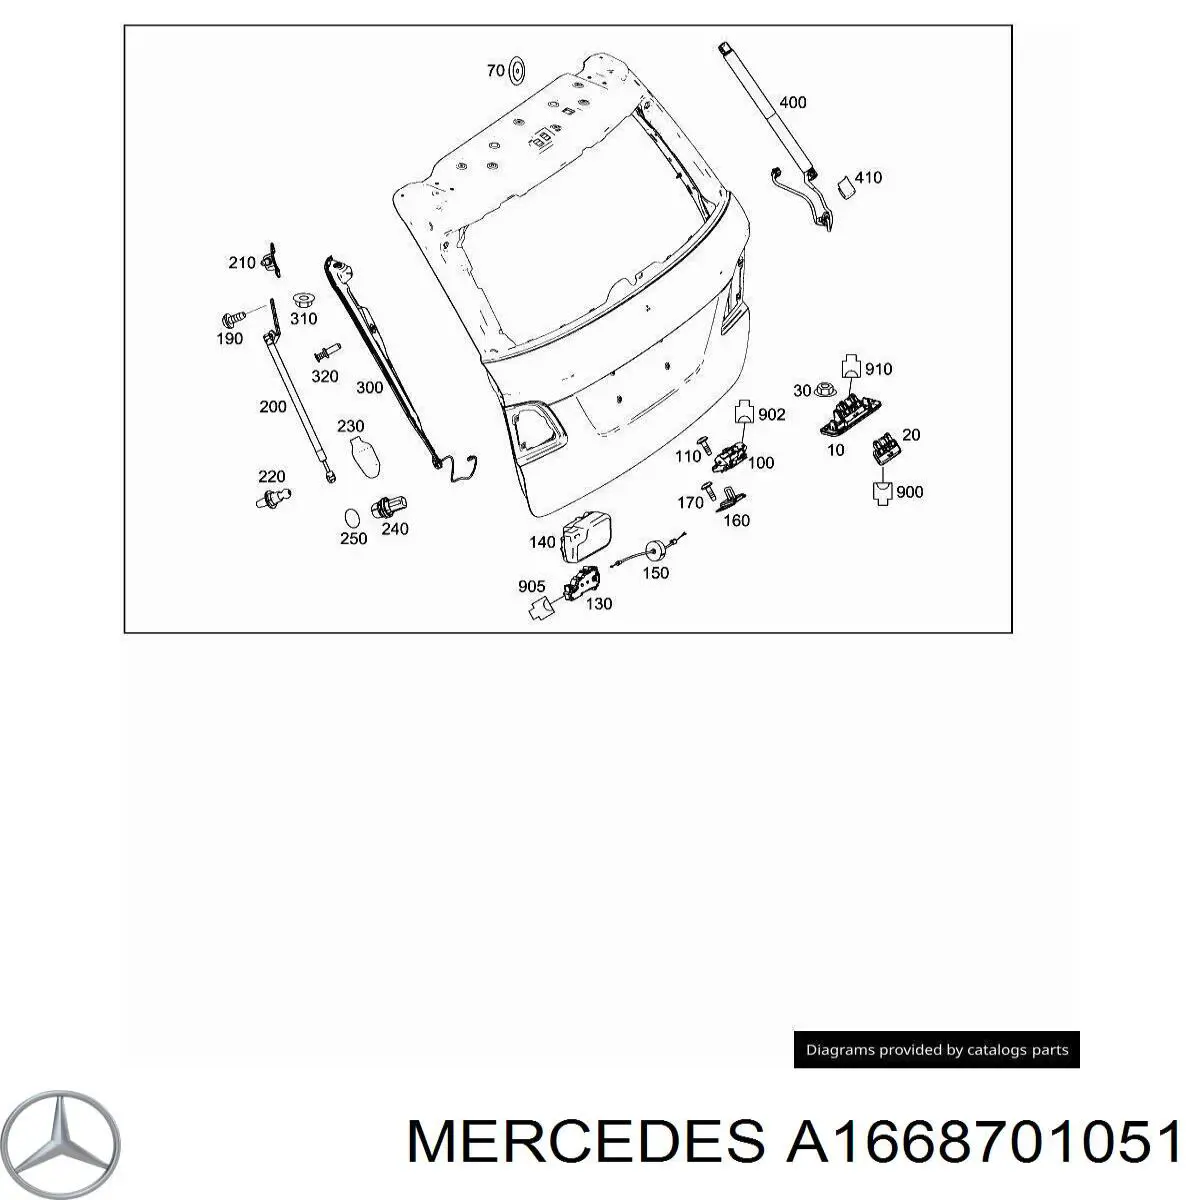 A1668701051 Mercedes